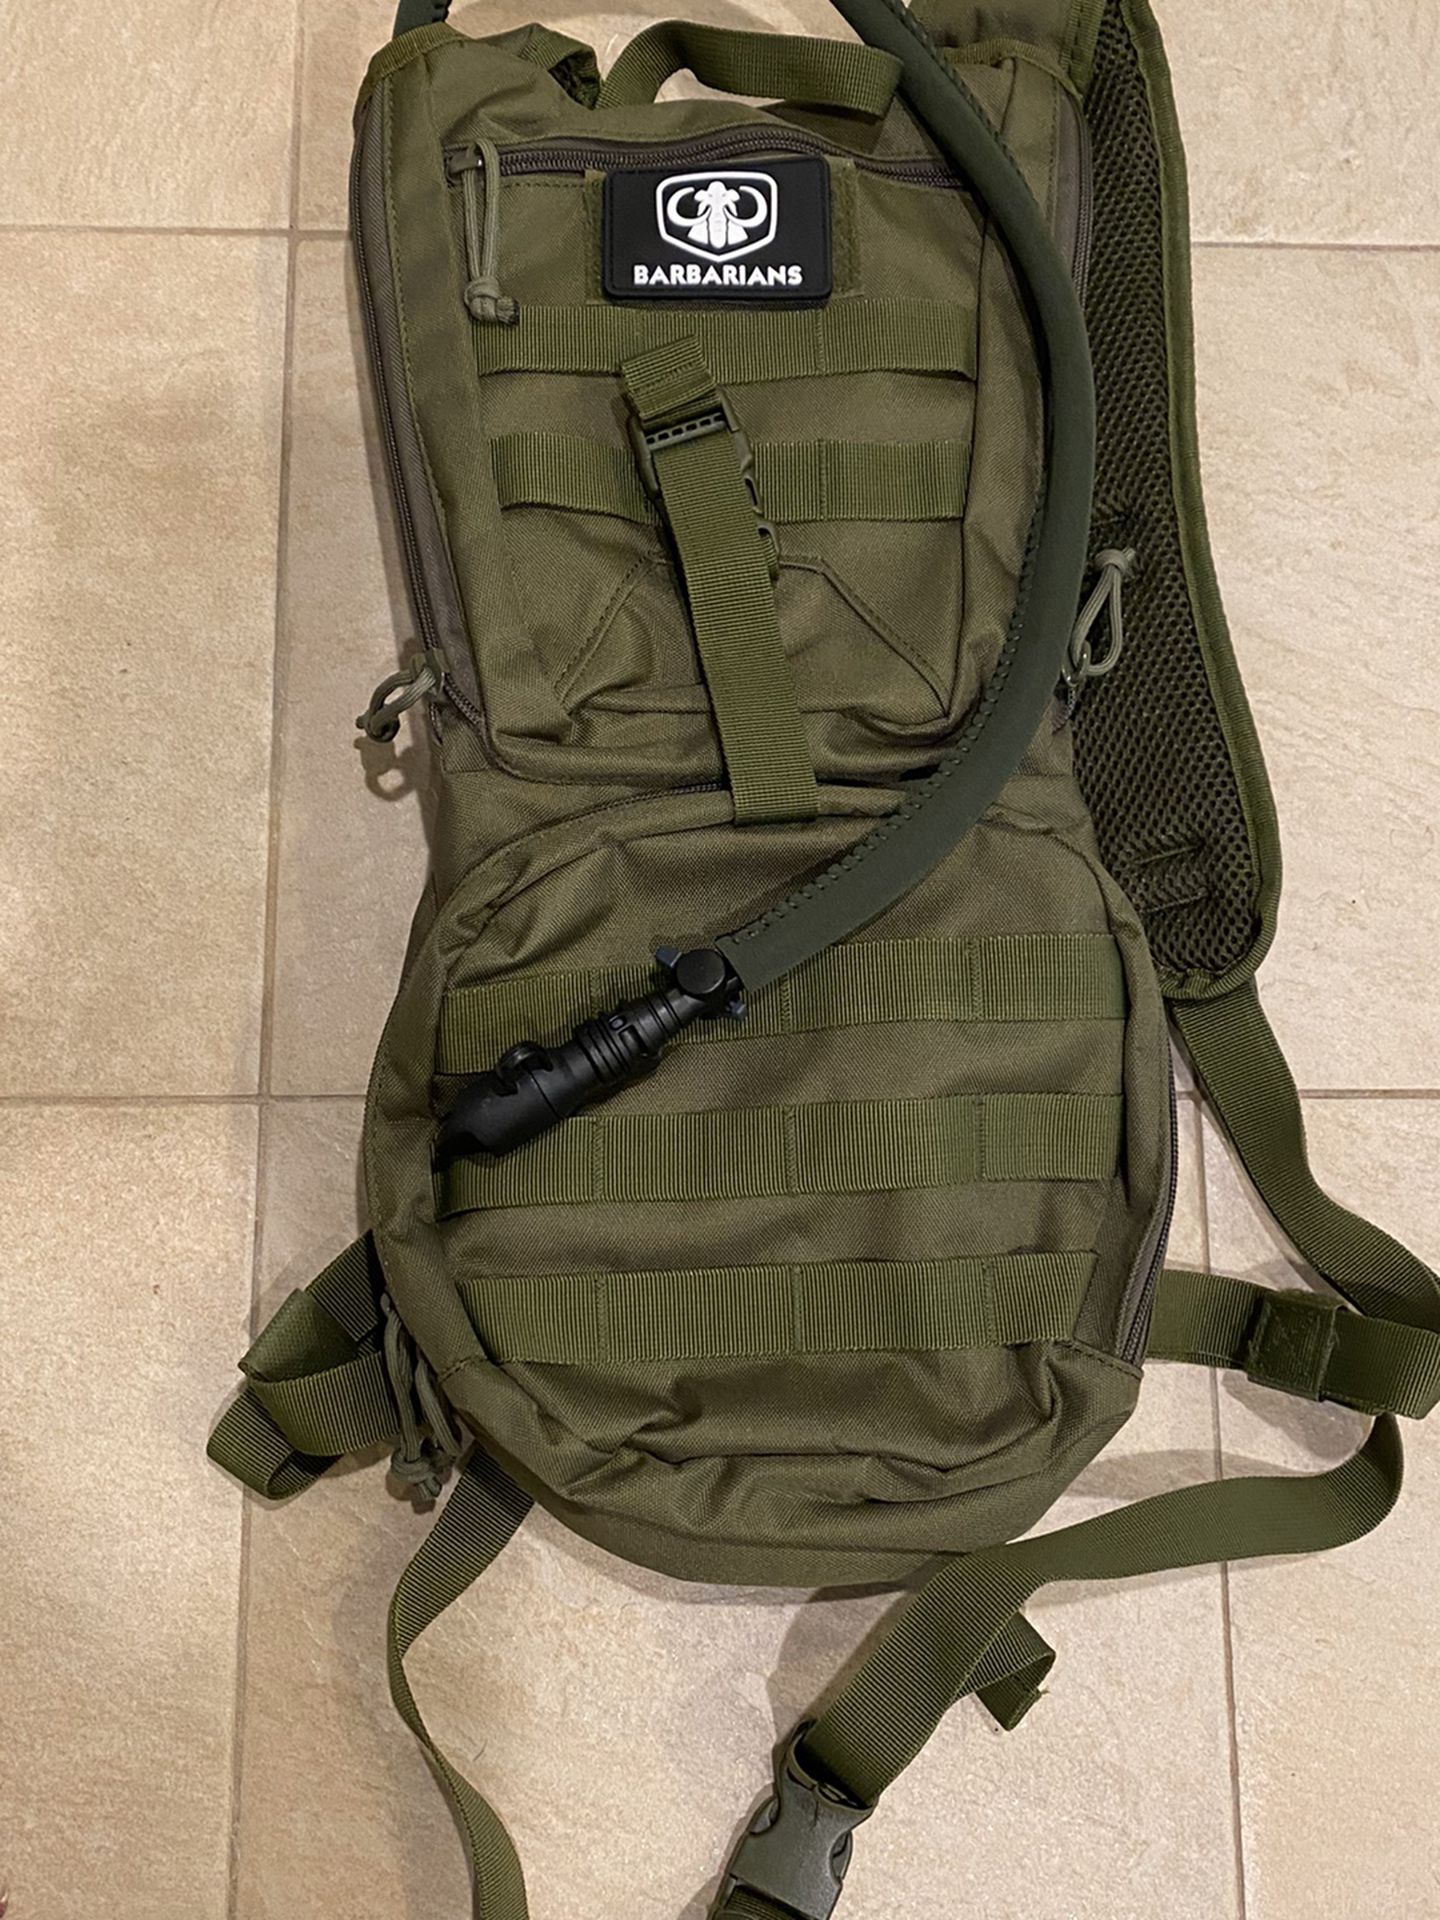 Hiking bladder hydration backpack, Barnarians